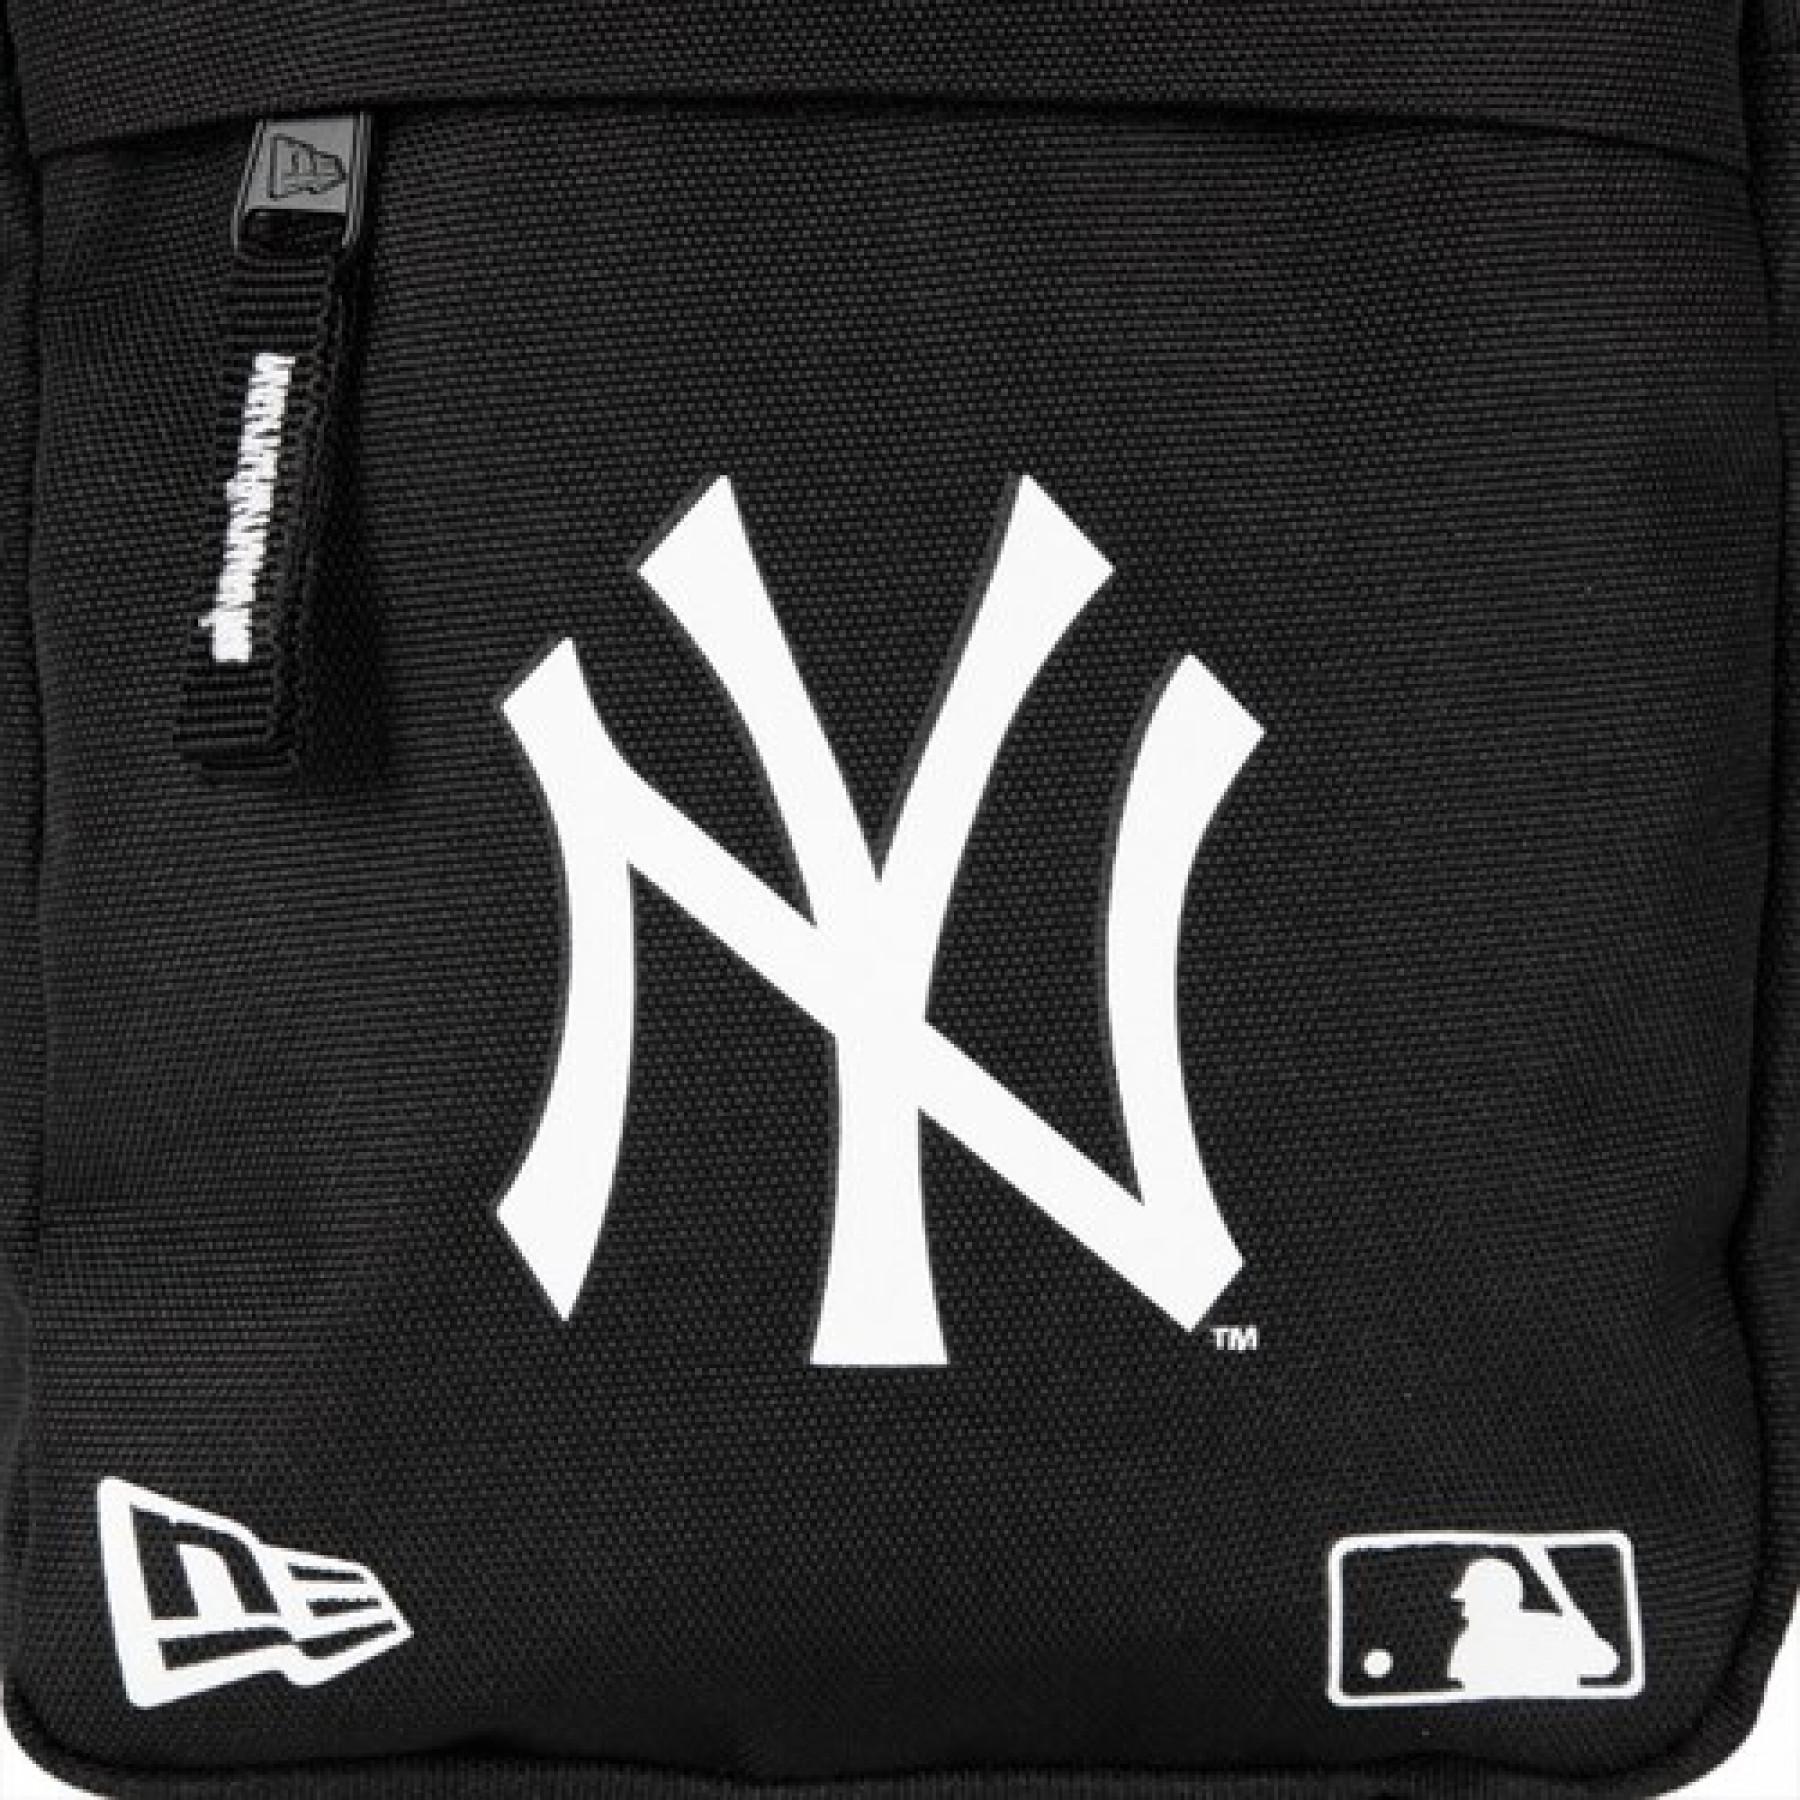 New Era Mens MLB New York Yankees Side Bag Crossbody Bag 11942030 Black